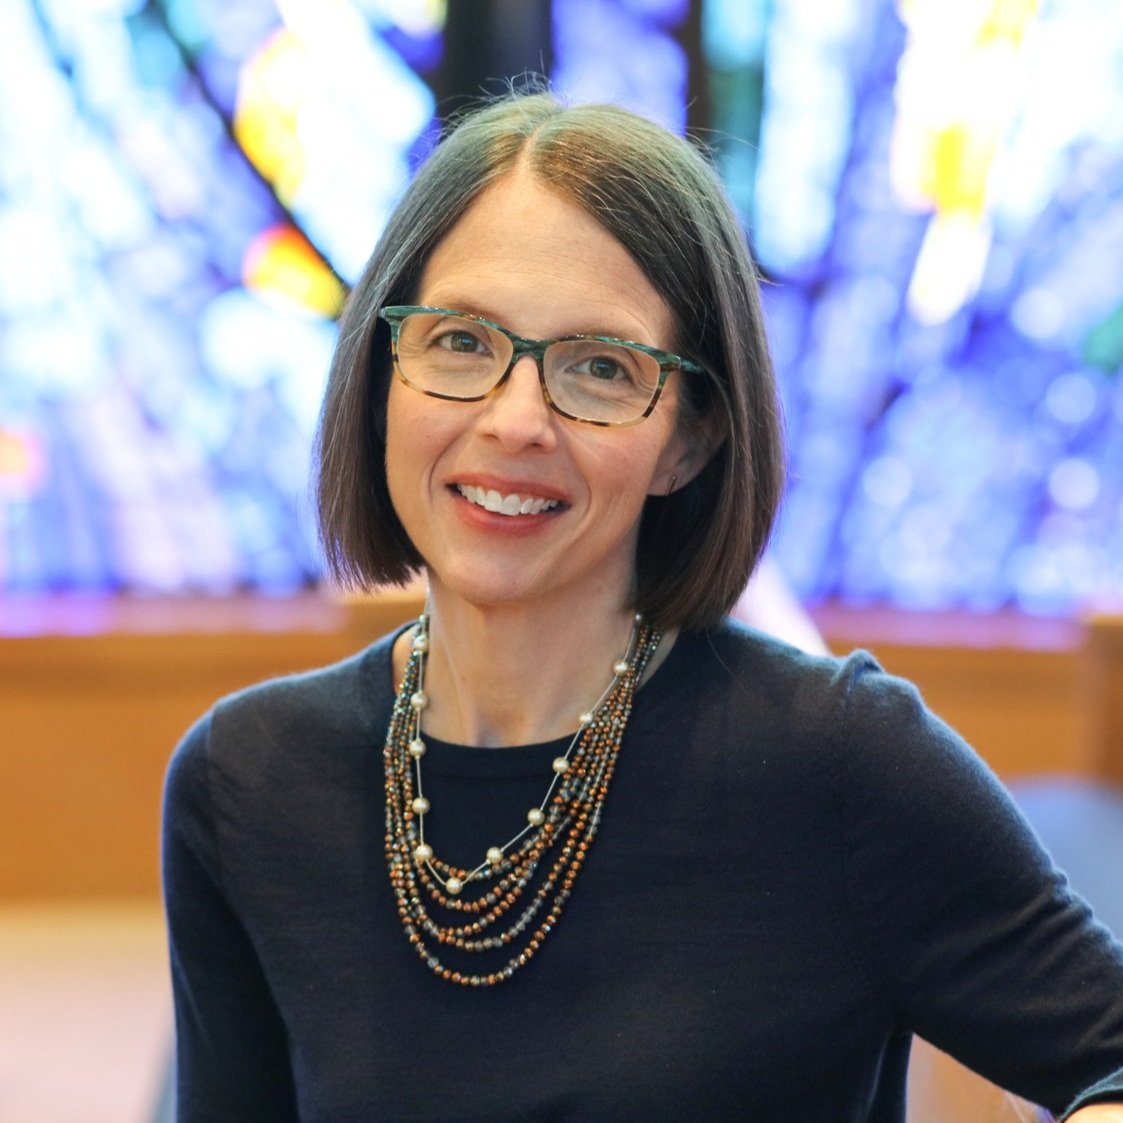 Dr. Jennifer Schroeder